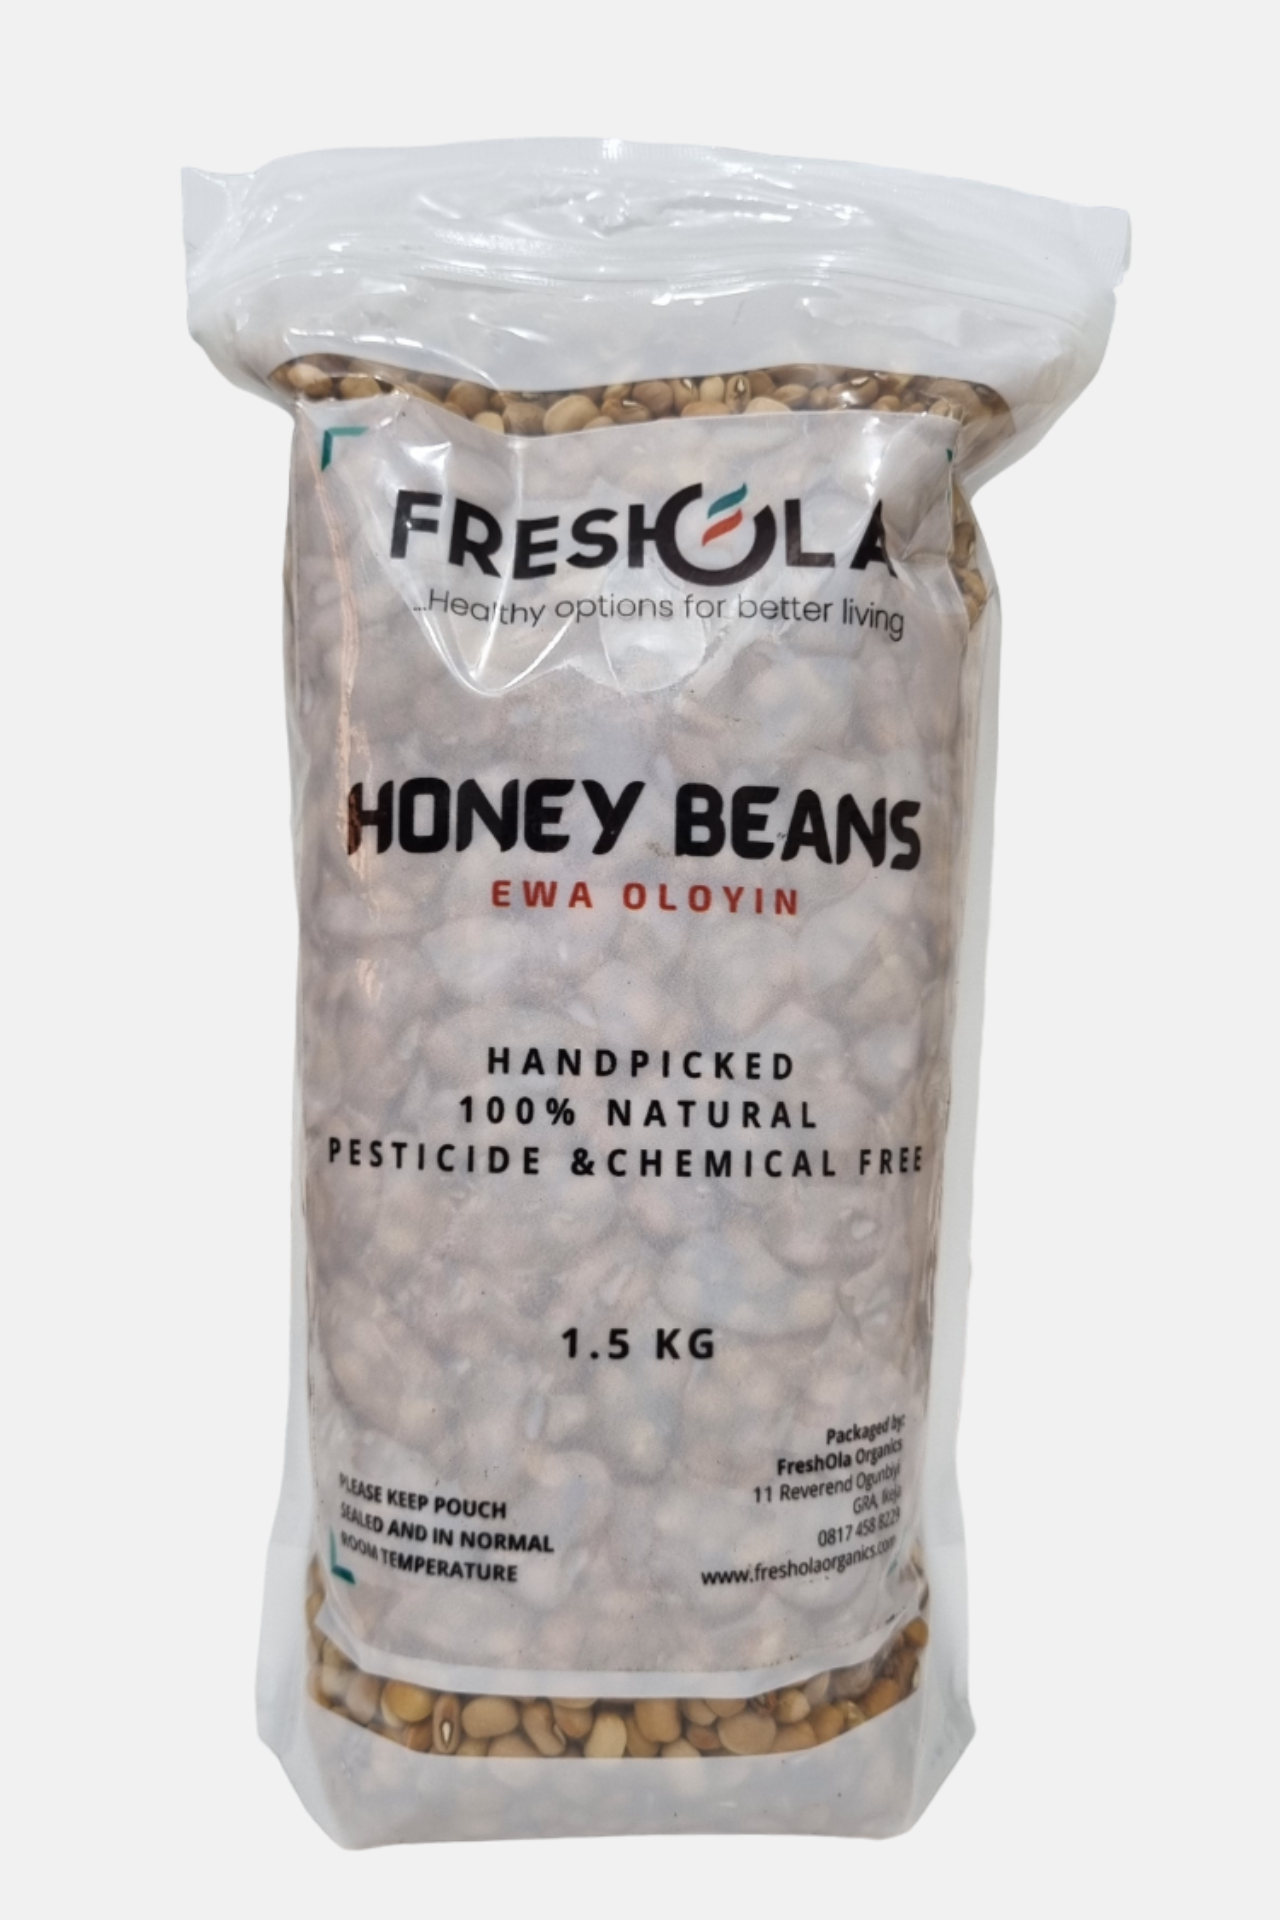 Freshola Honey Beans